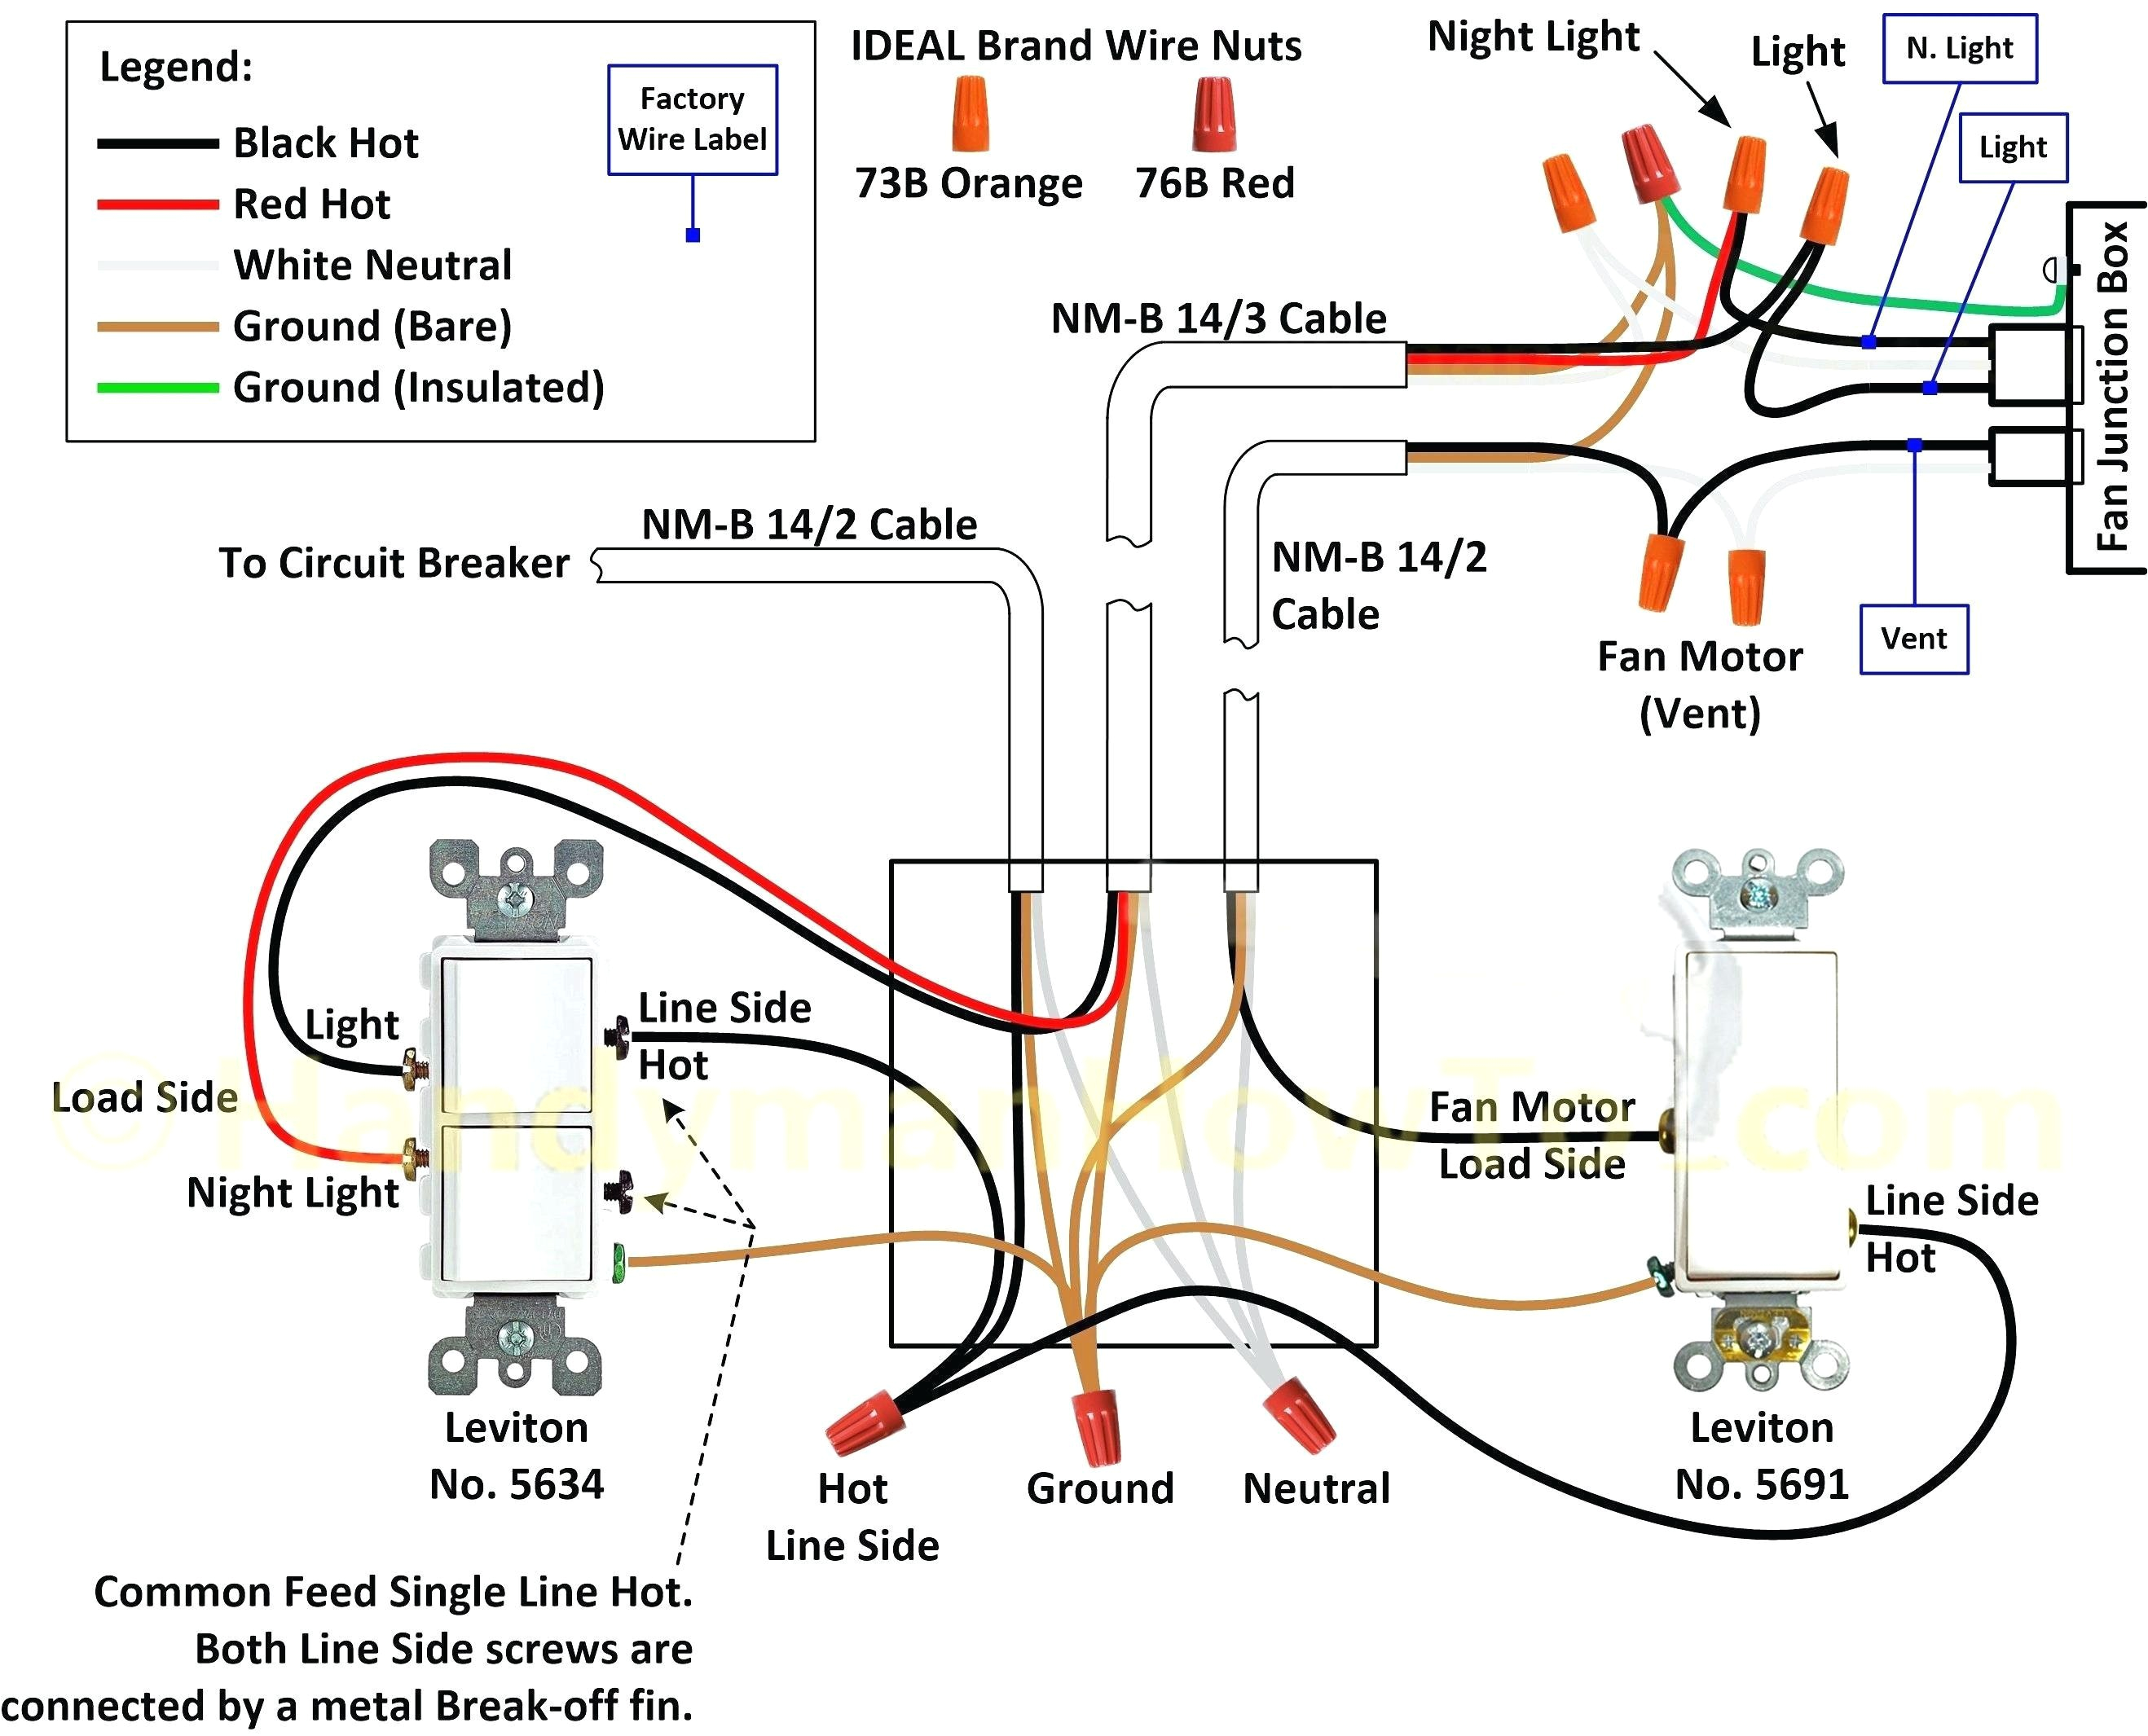 fuse box wiring a 110 wiring diagram meta fuse box wiring a 110 wiring diagram recent